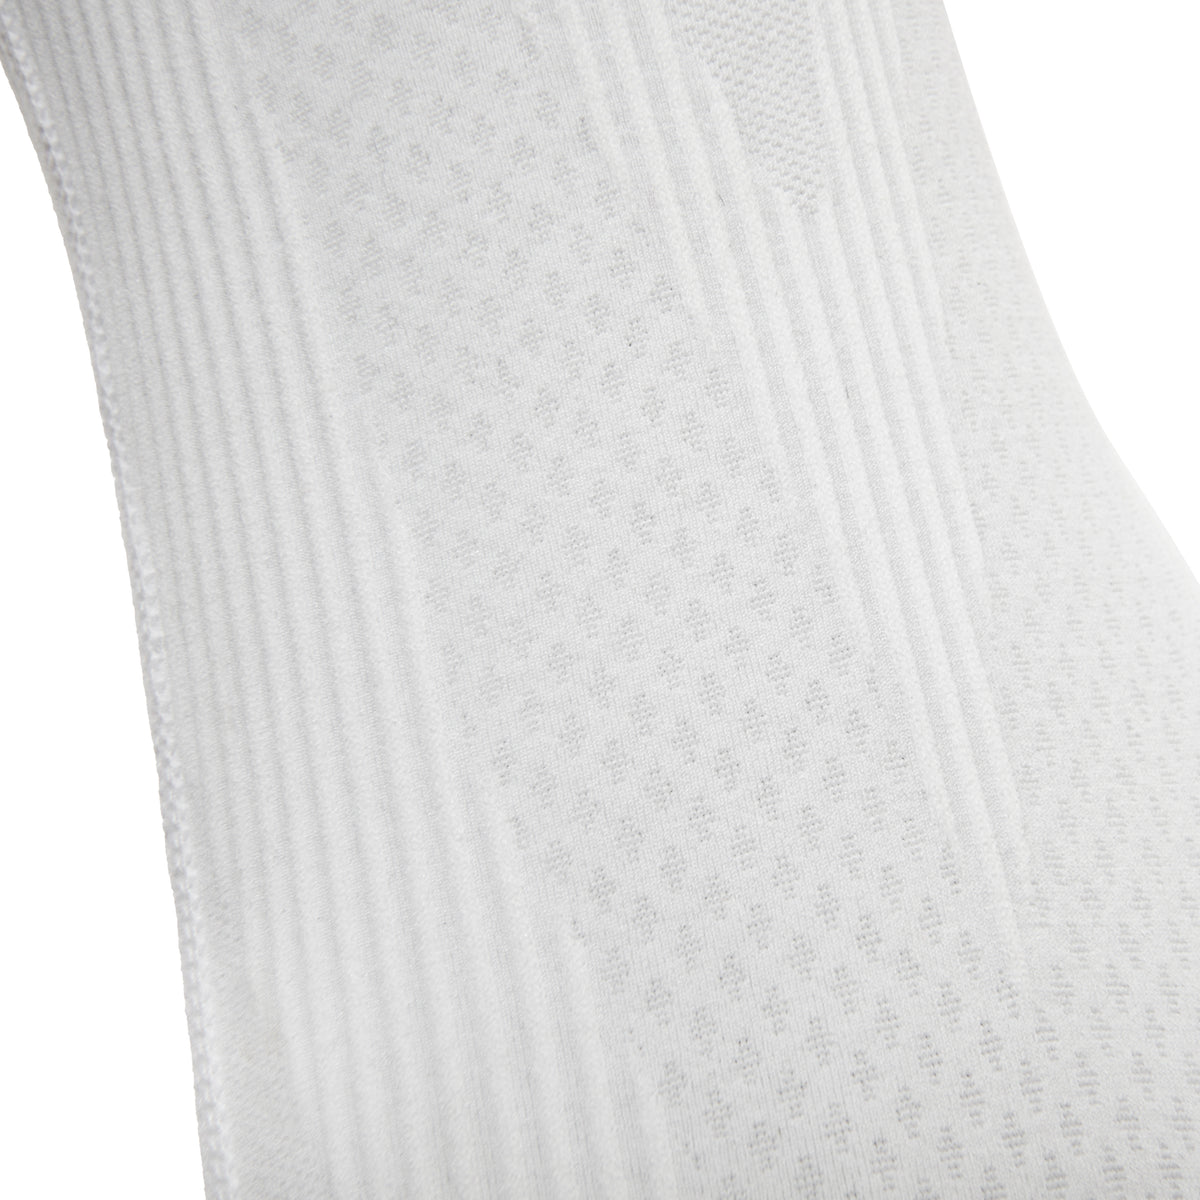 adidas Compression Arm Sleeves white texture closeup